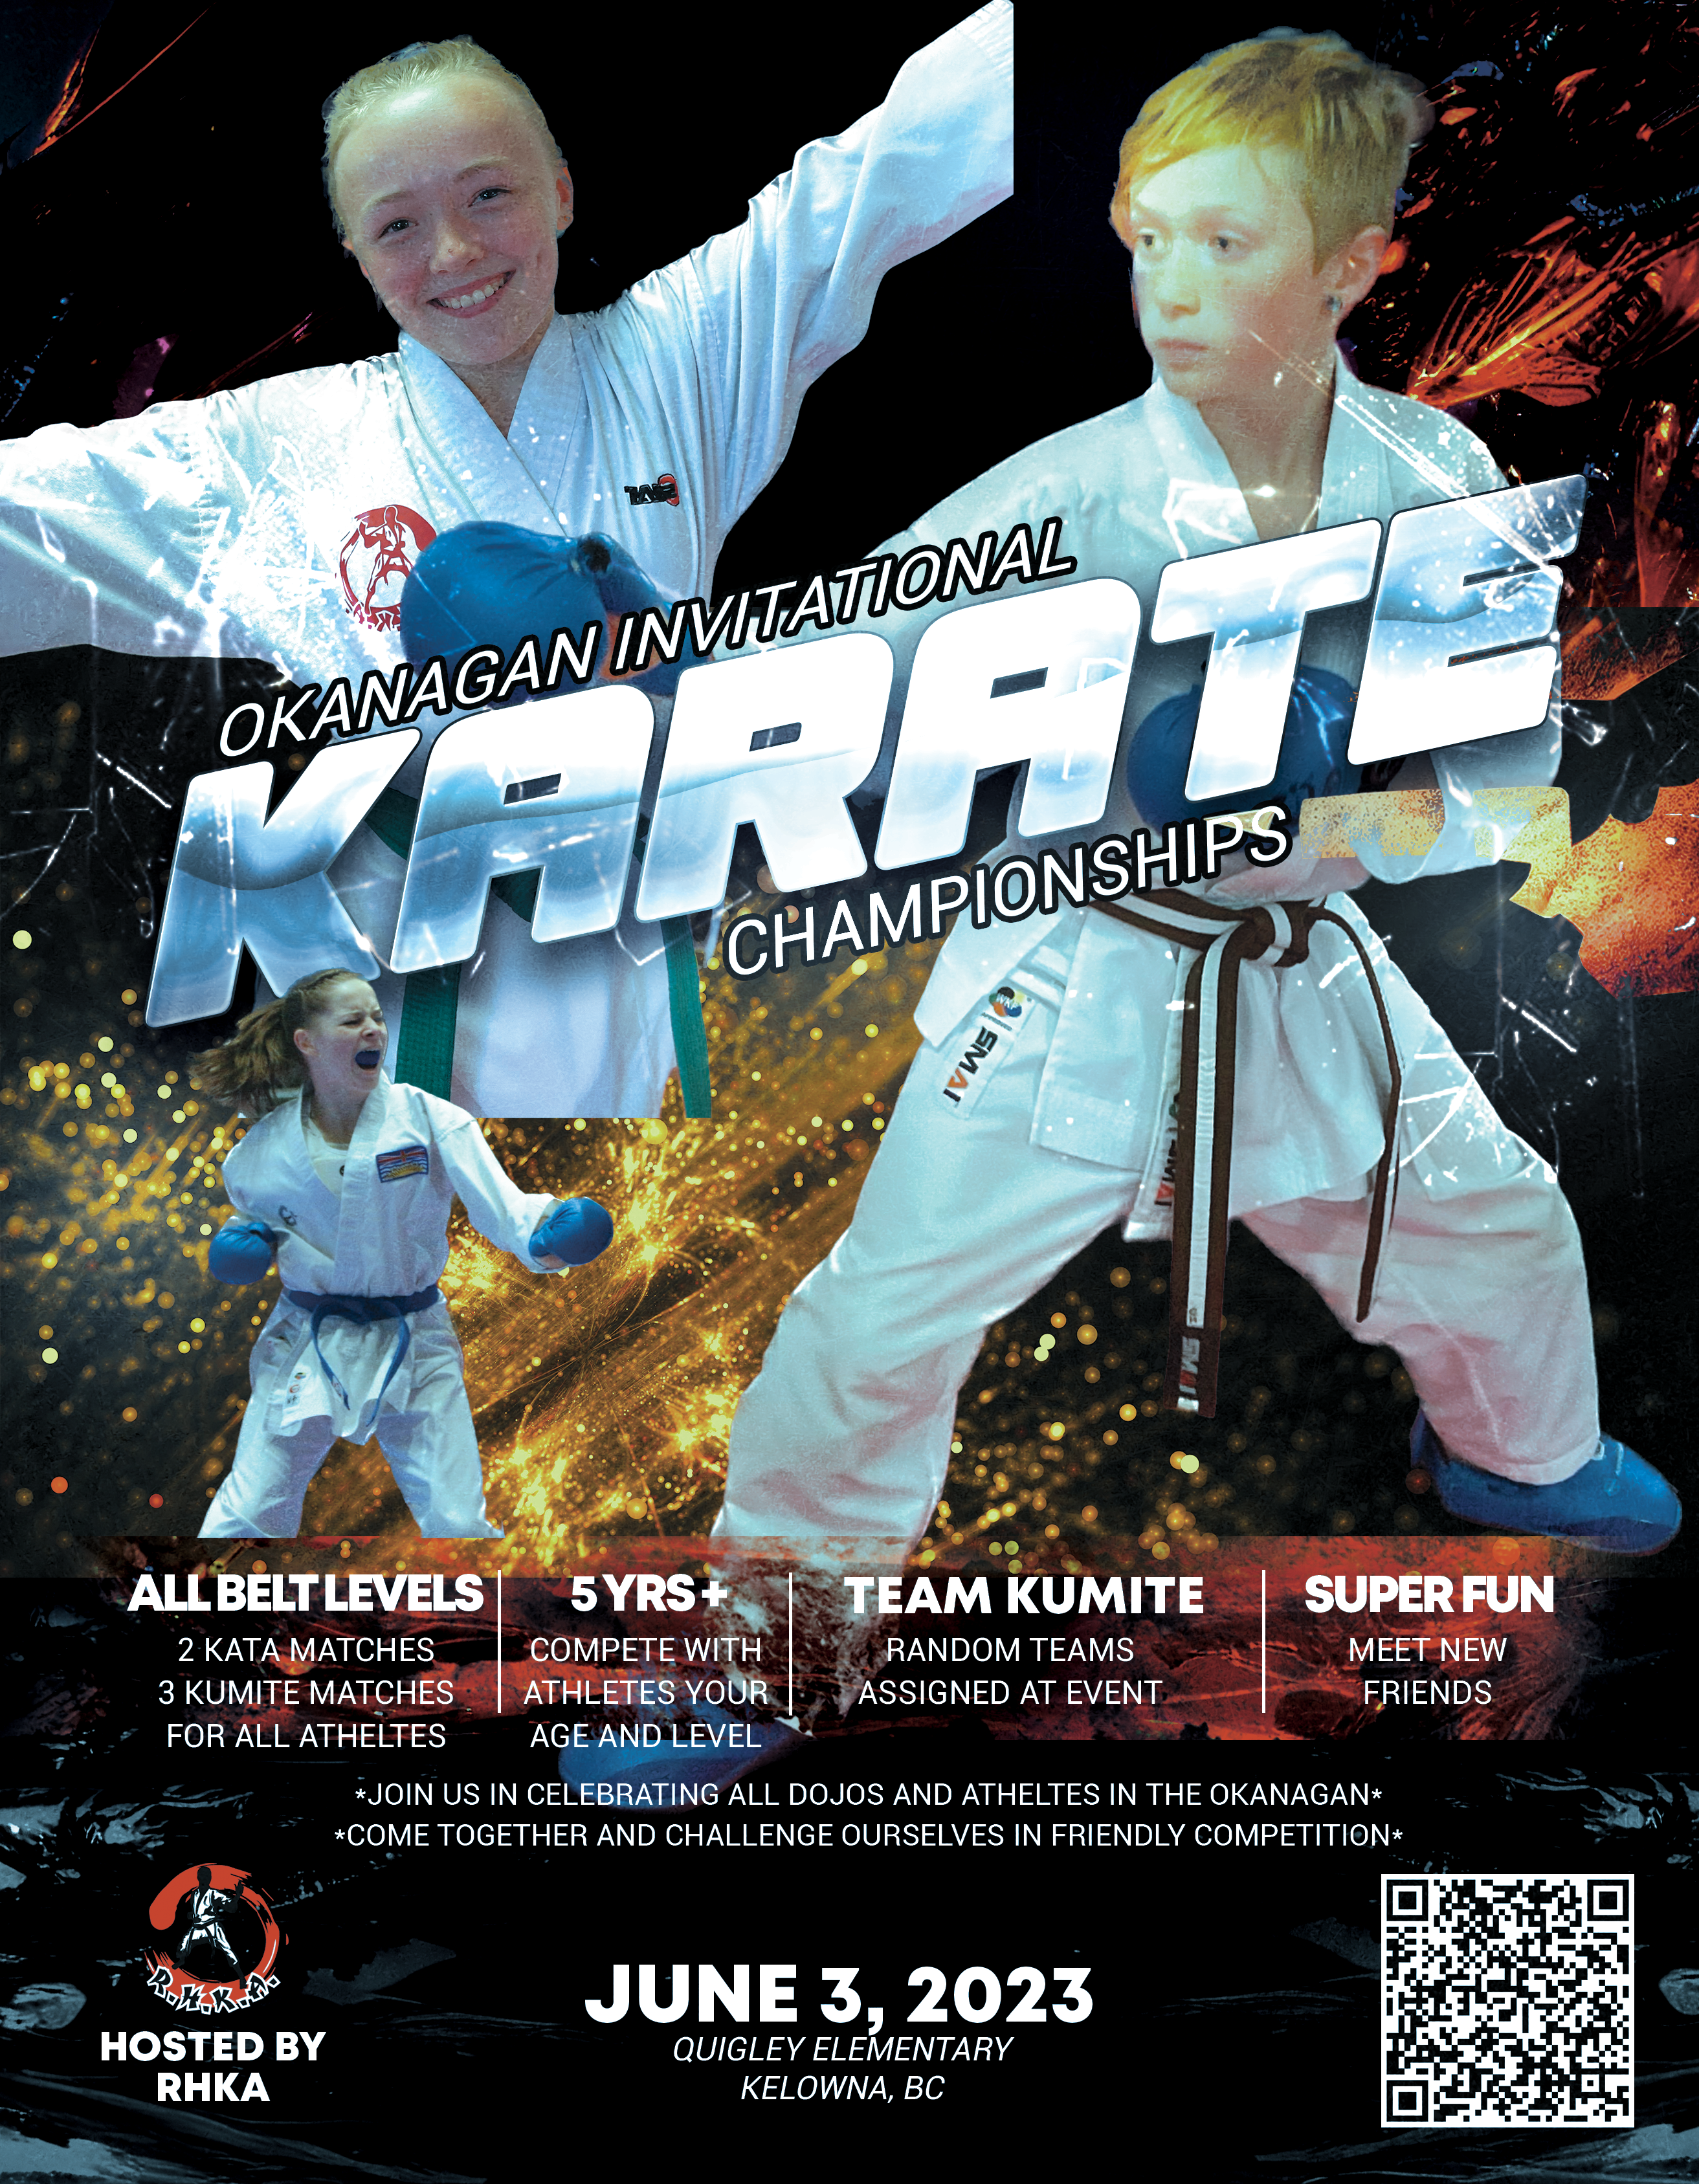 Okanagan Invitational Karate Championship